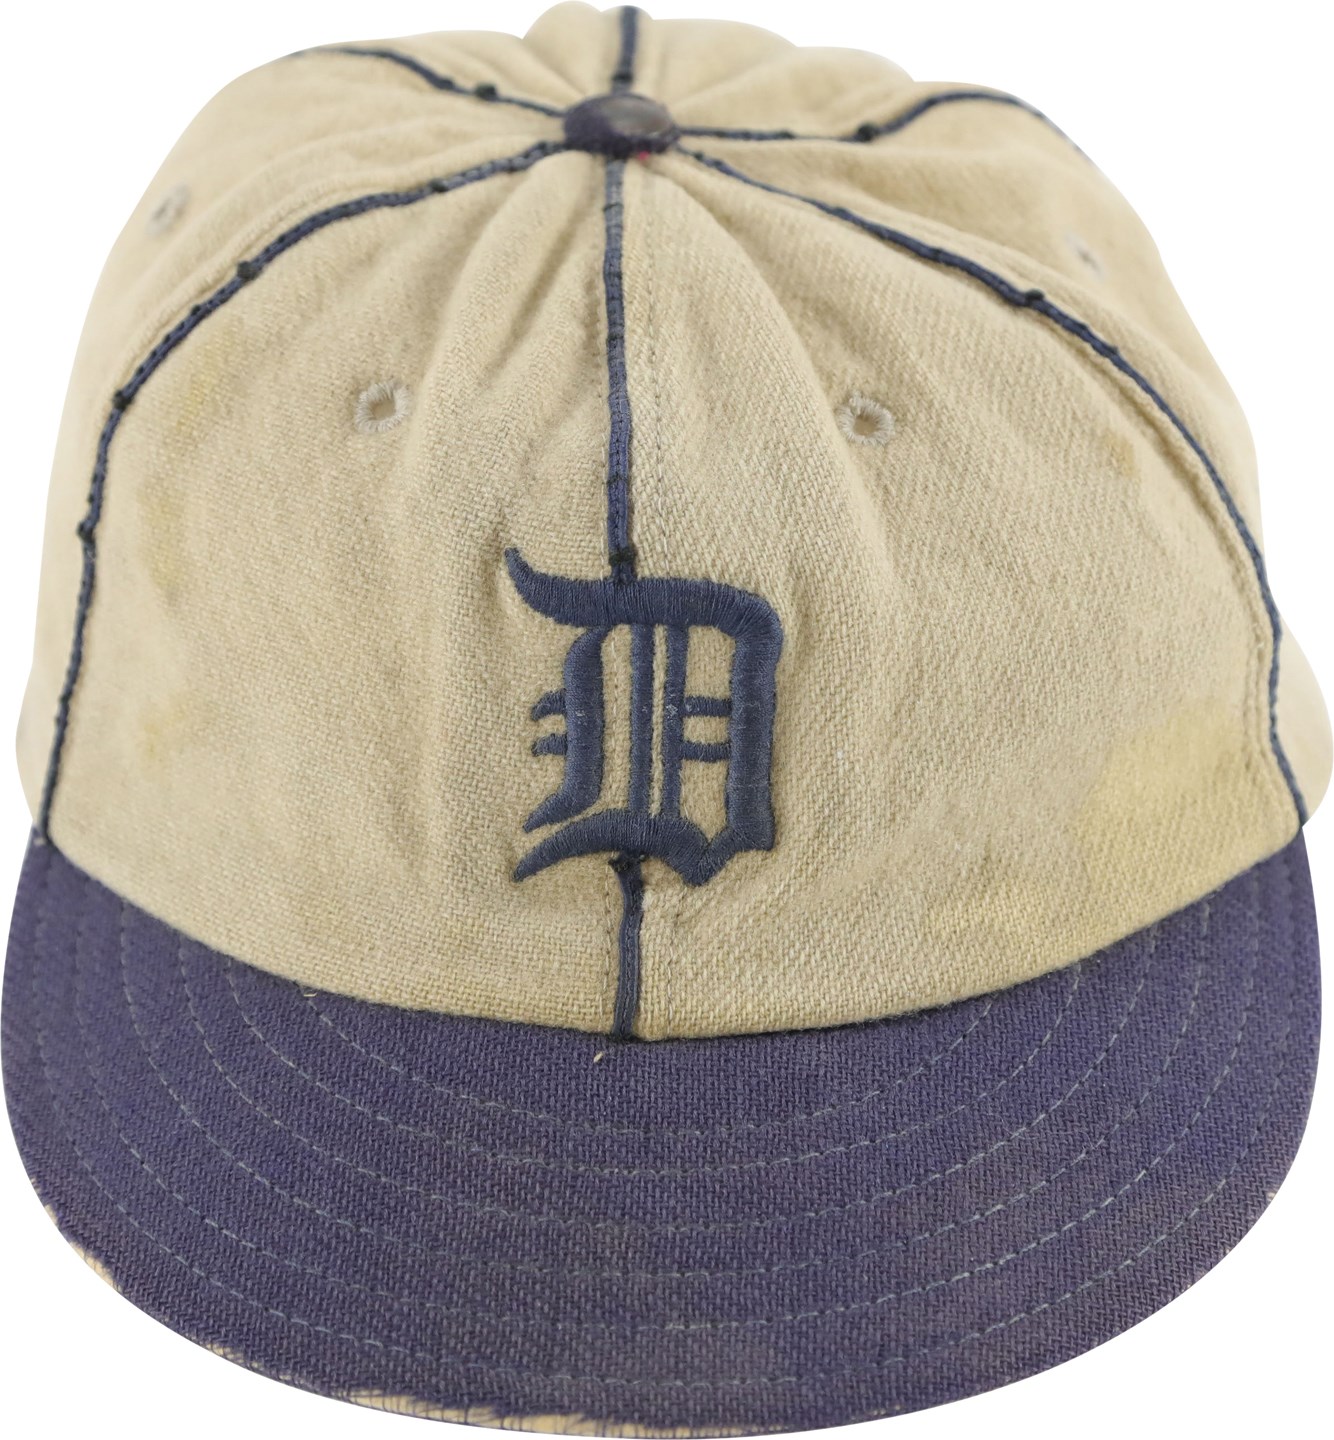 - Circa 1932 Detroit Tigers Baseball Hat